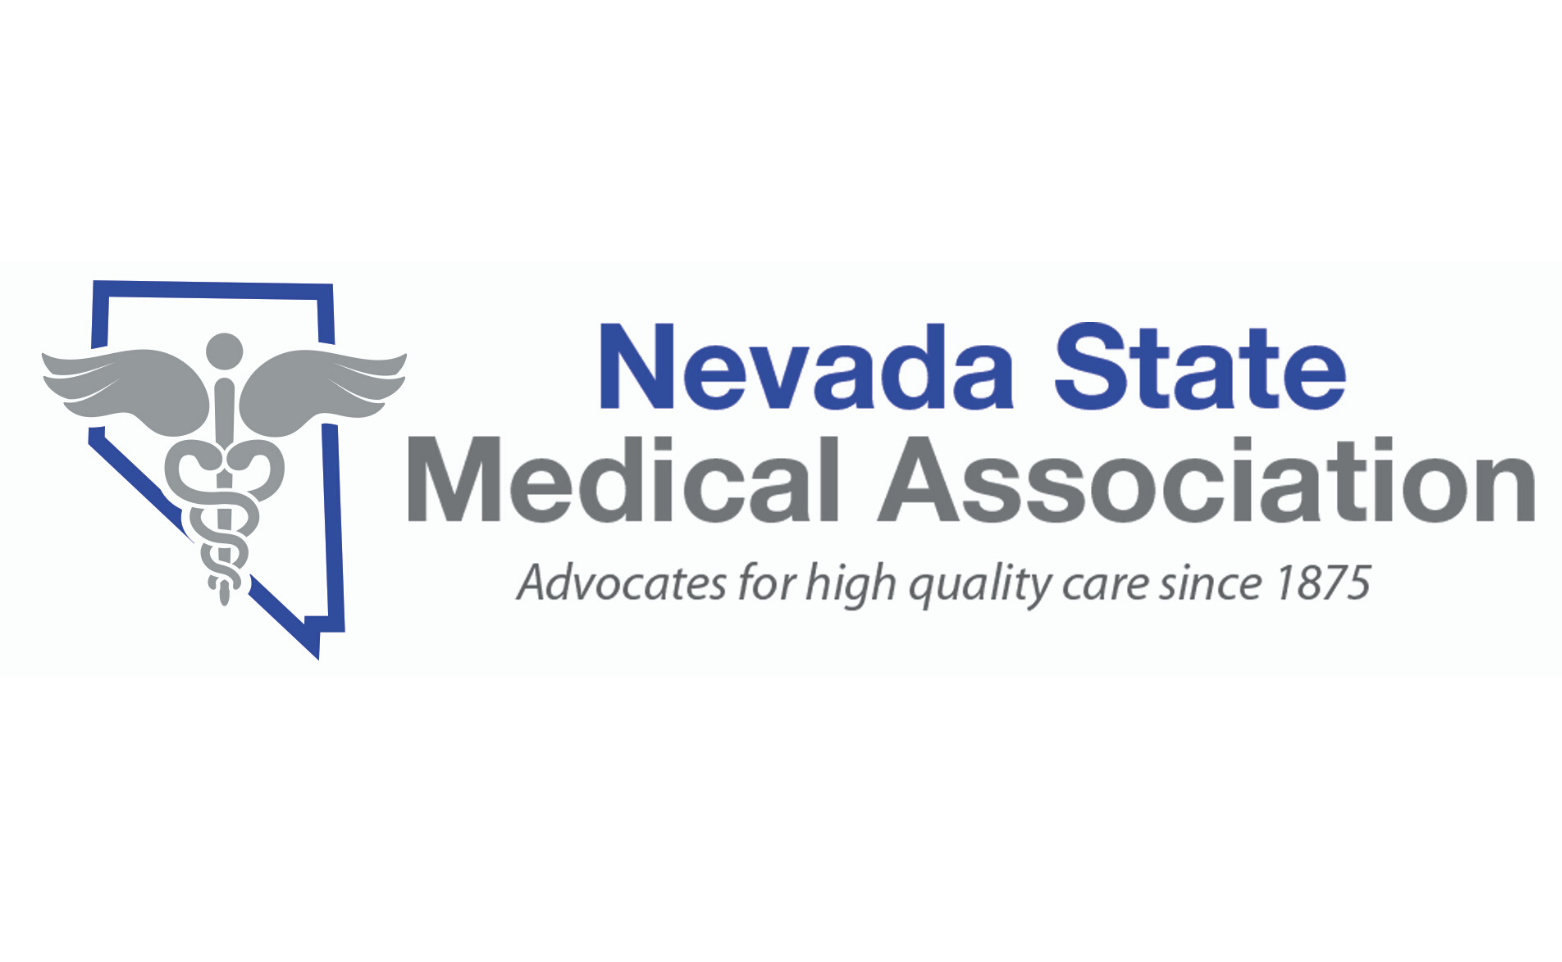 Nevada State Medical Association